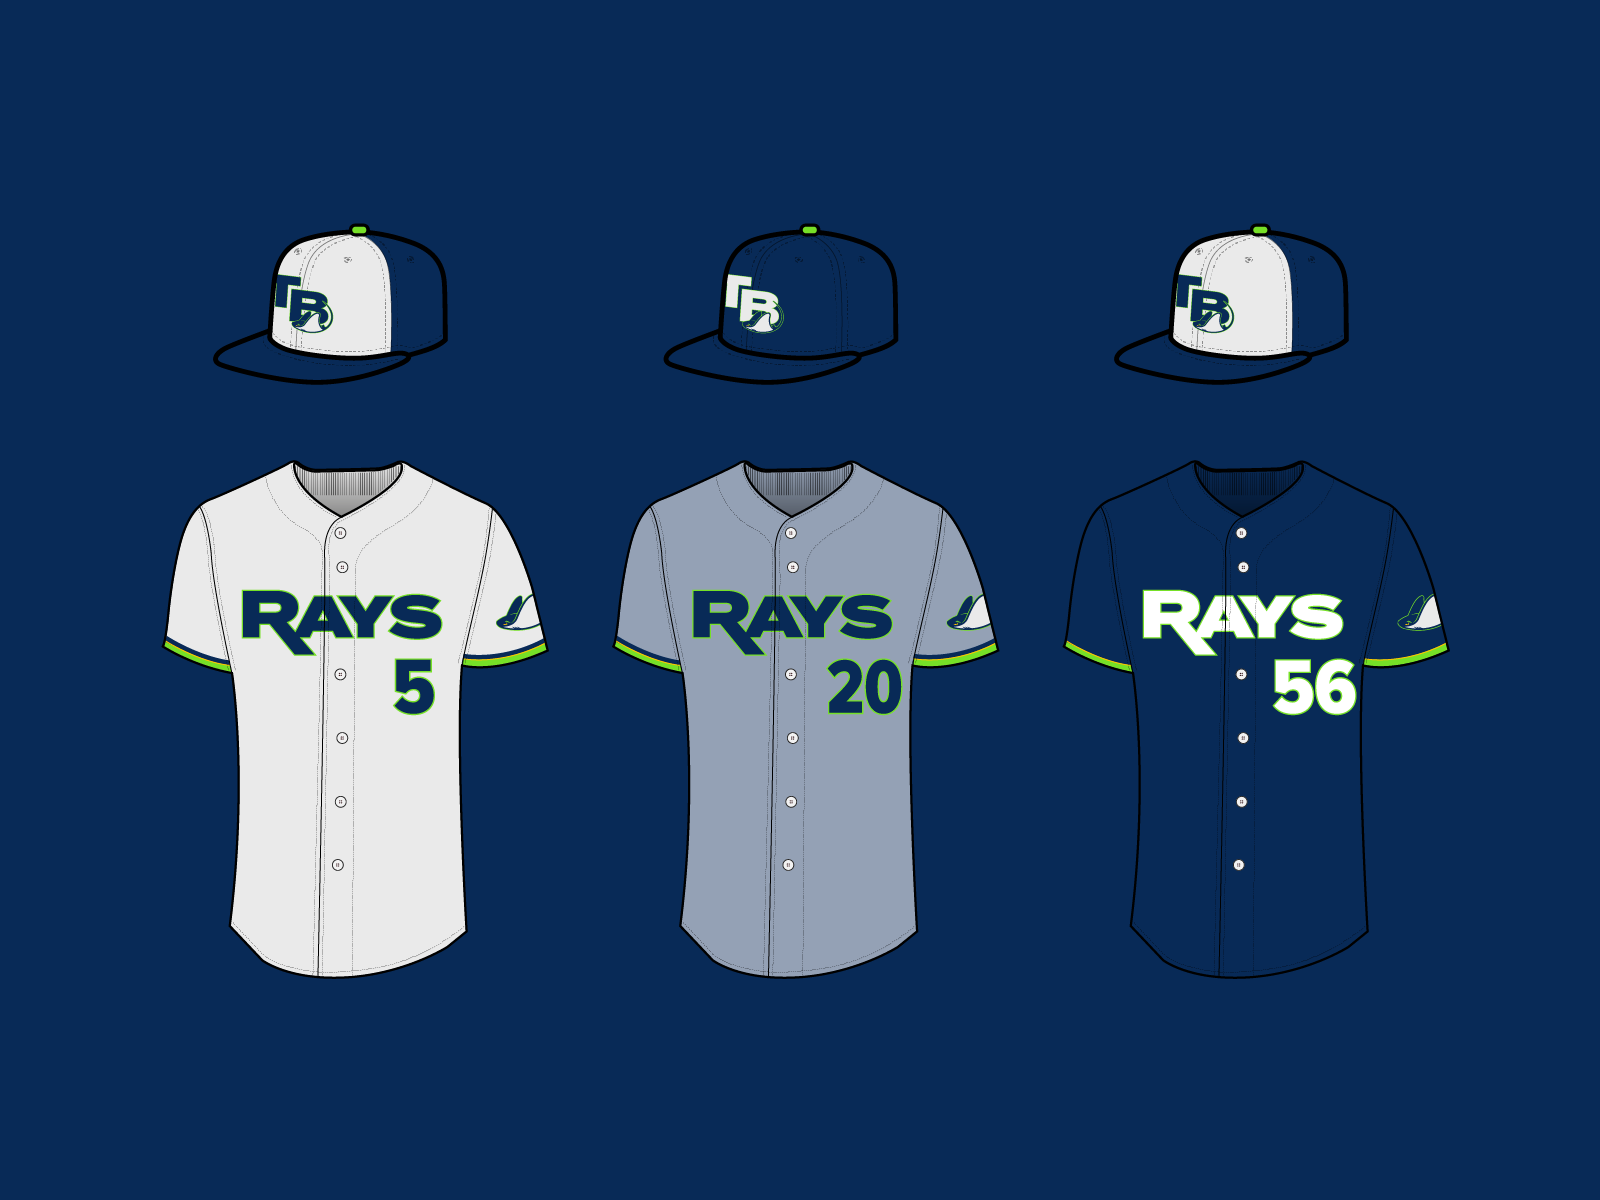 new rays uniforms